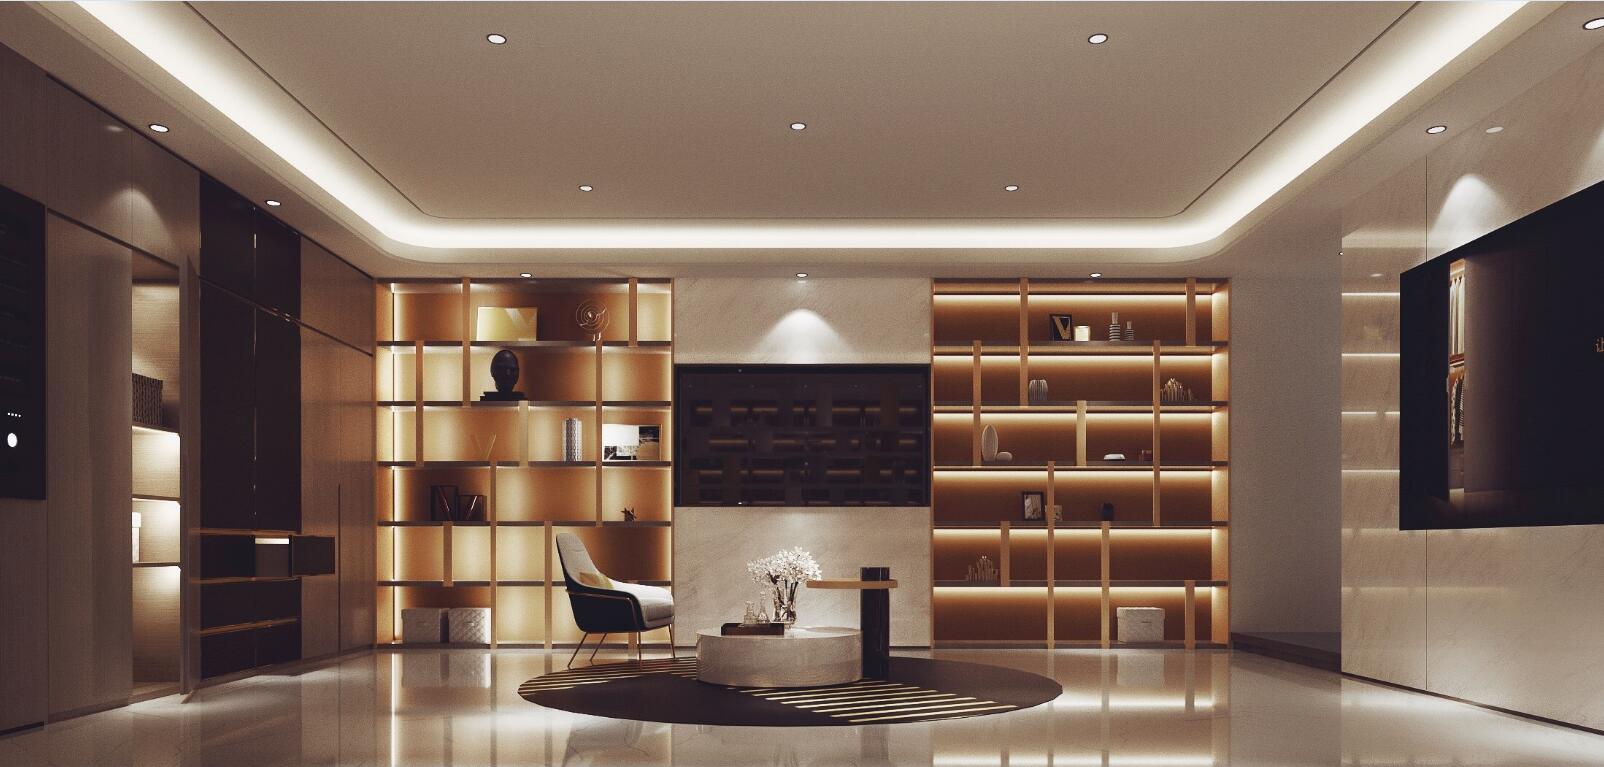 Living room cabinet lamp lighting scheme